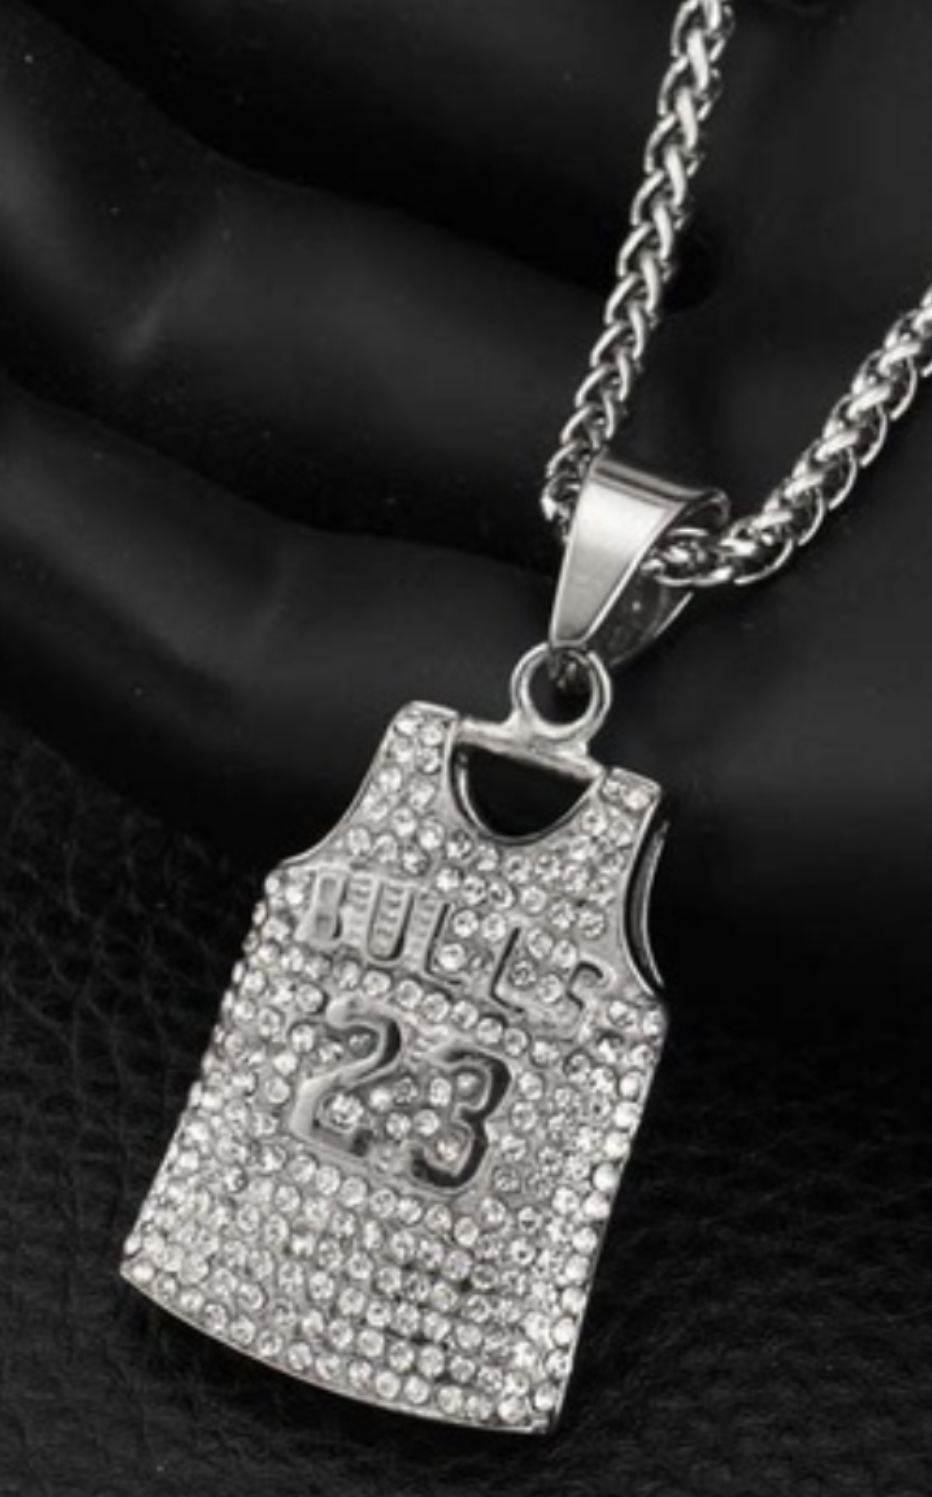 Chicago Bulls Necklace Black White Beads Souvenir | eBay